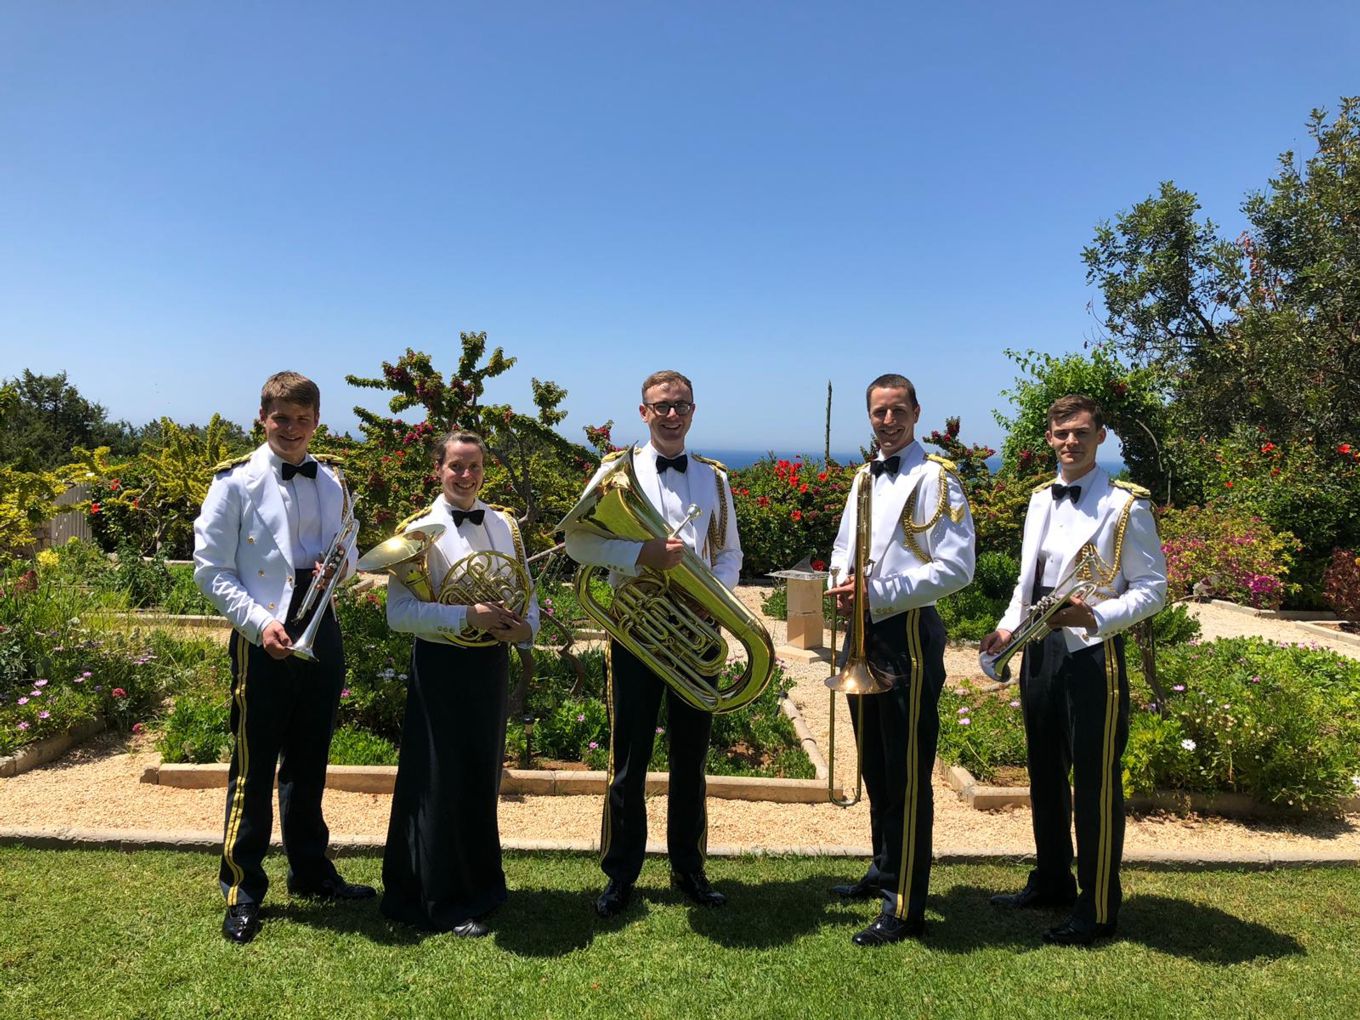 Uniformed brass quintet pose for a photograph.